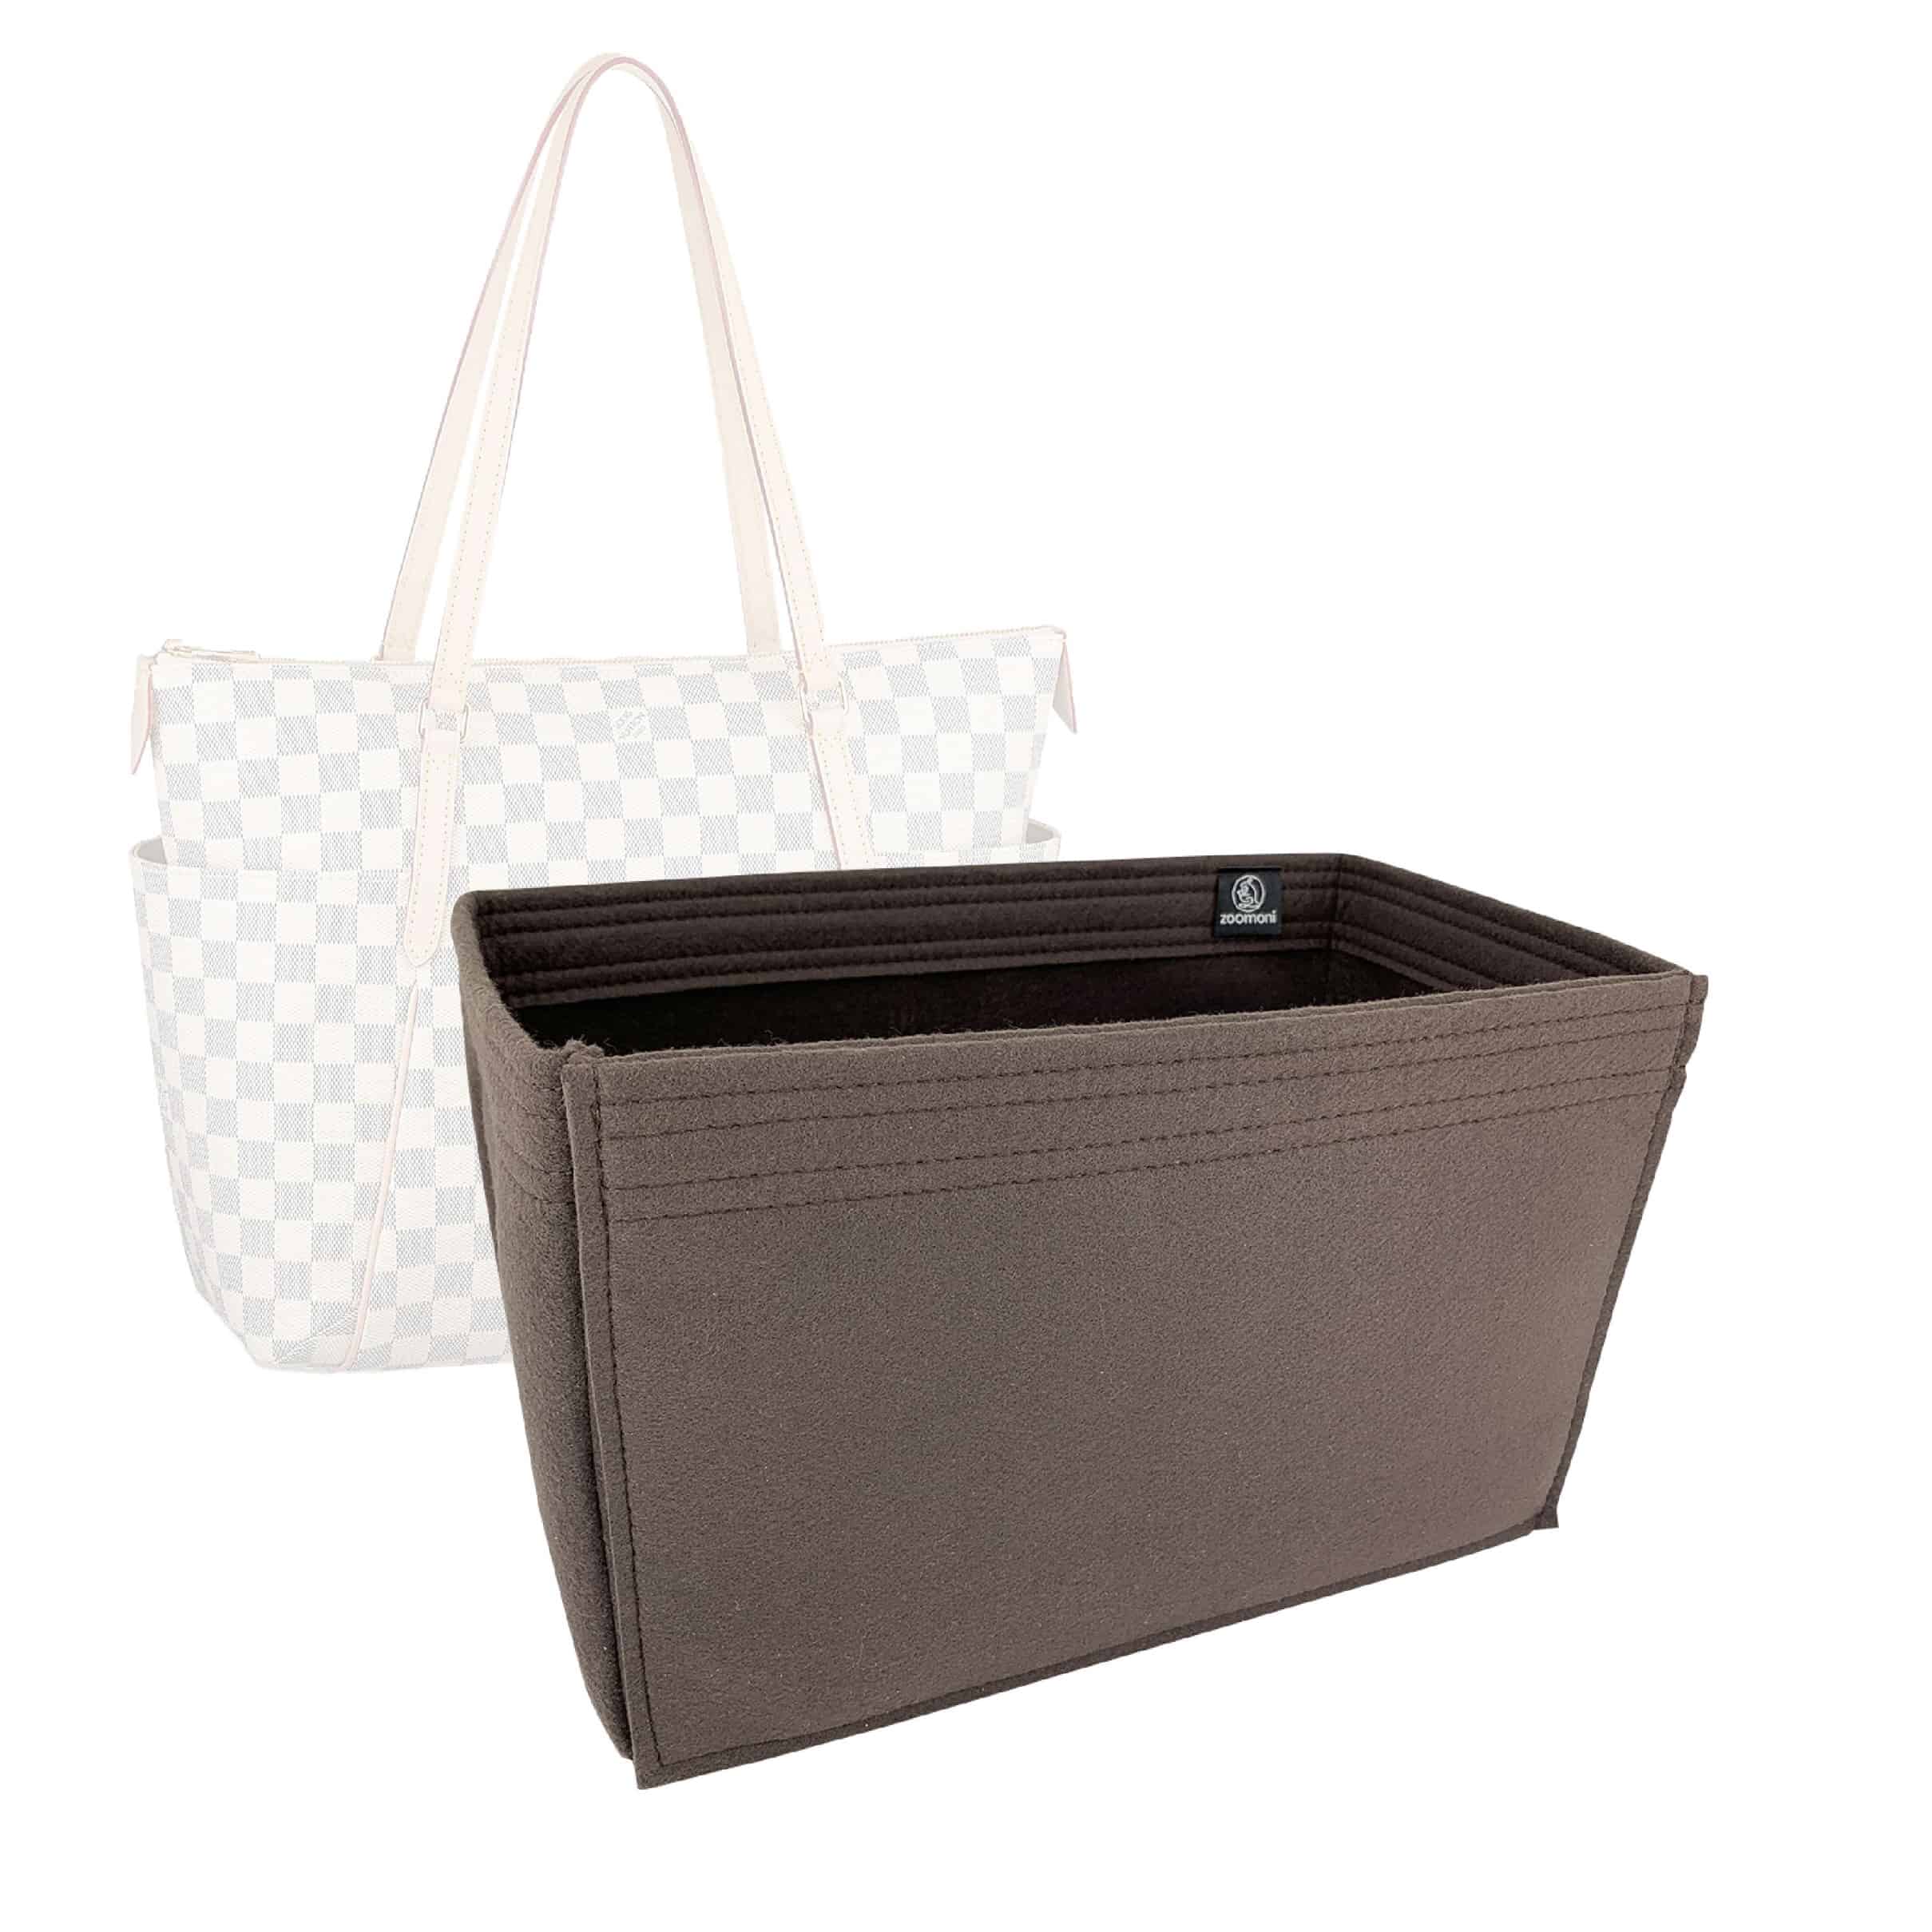 Bag Organizer for Louis Vuitton Graceful MM (Type B) - Zoomoni